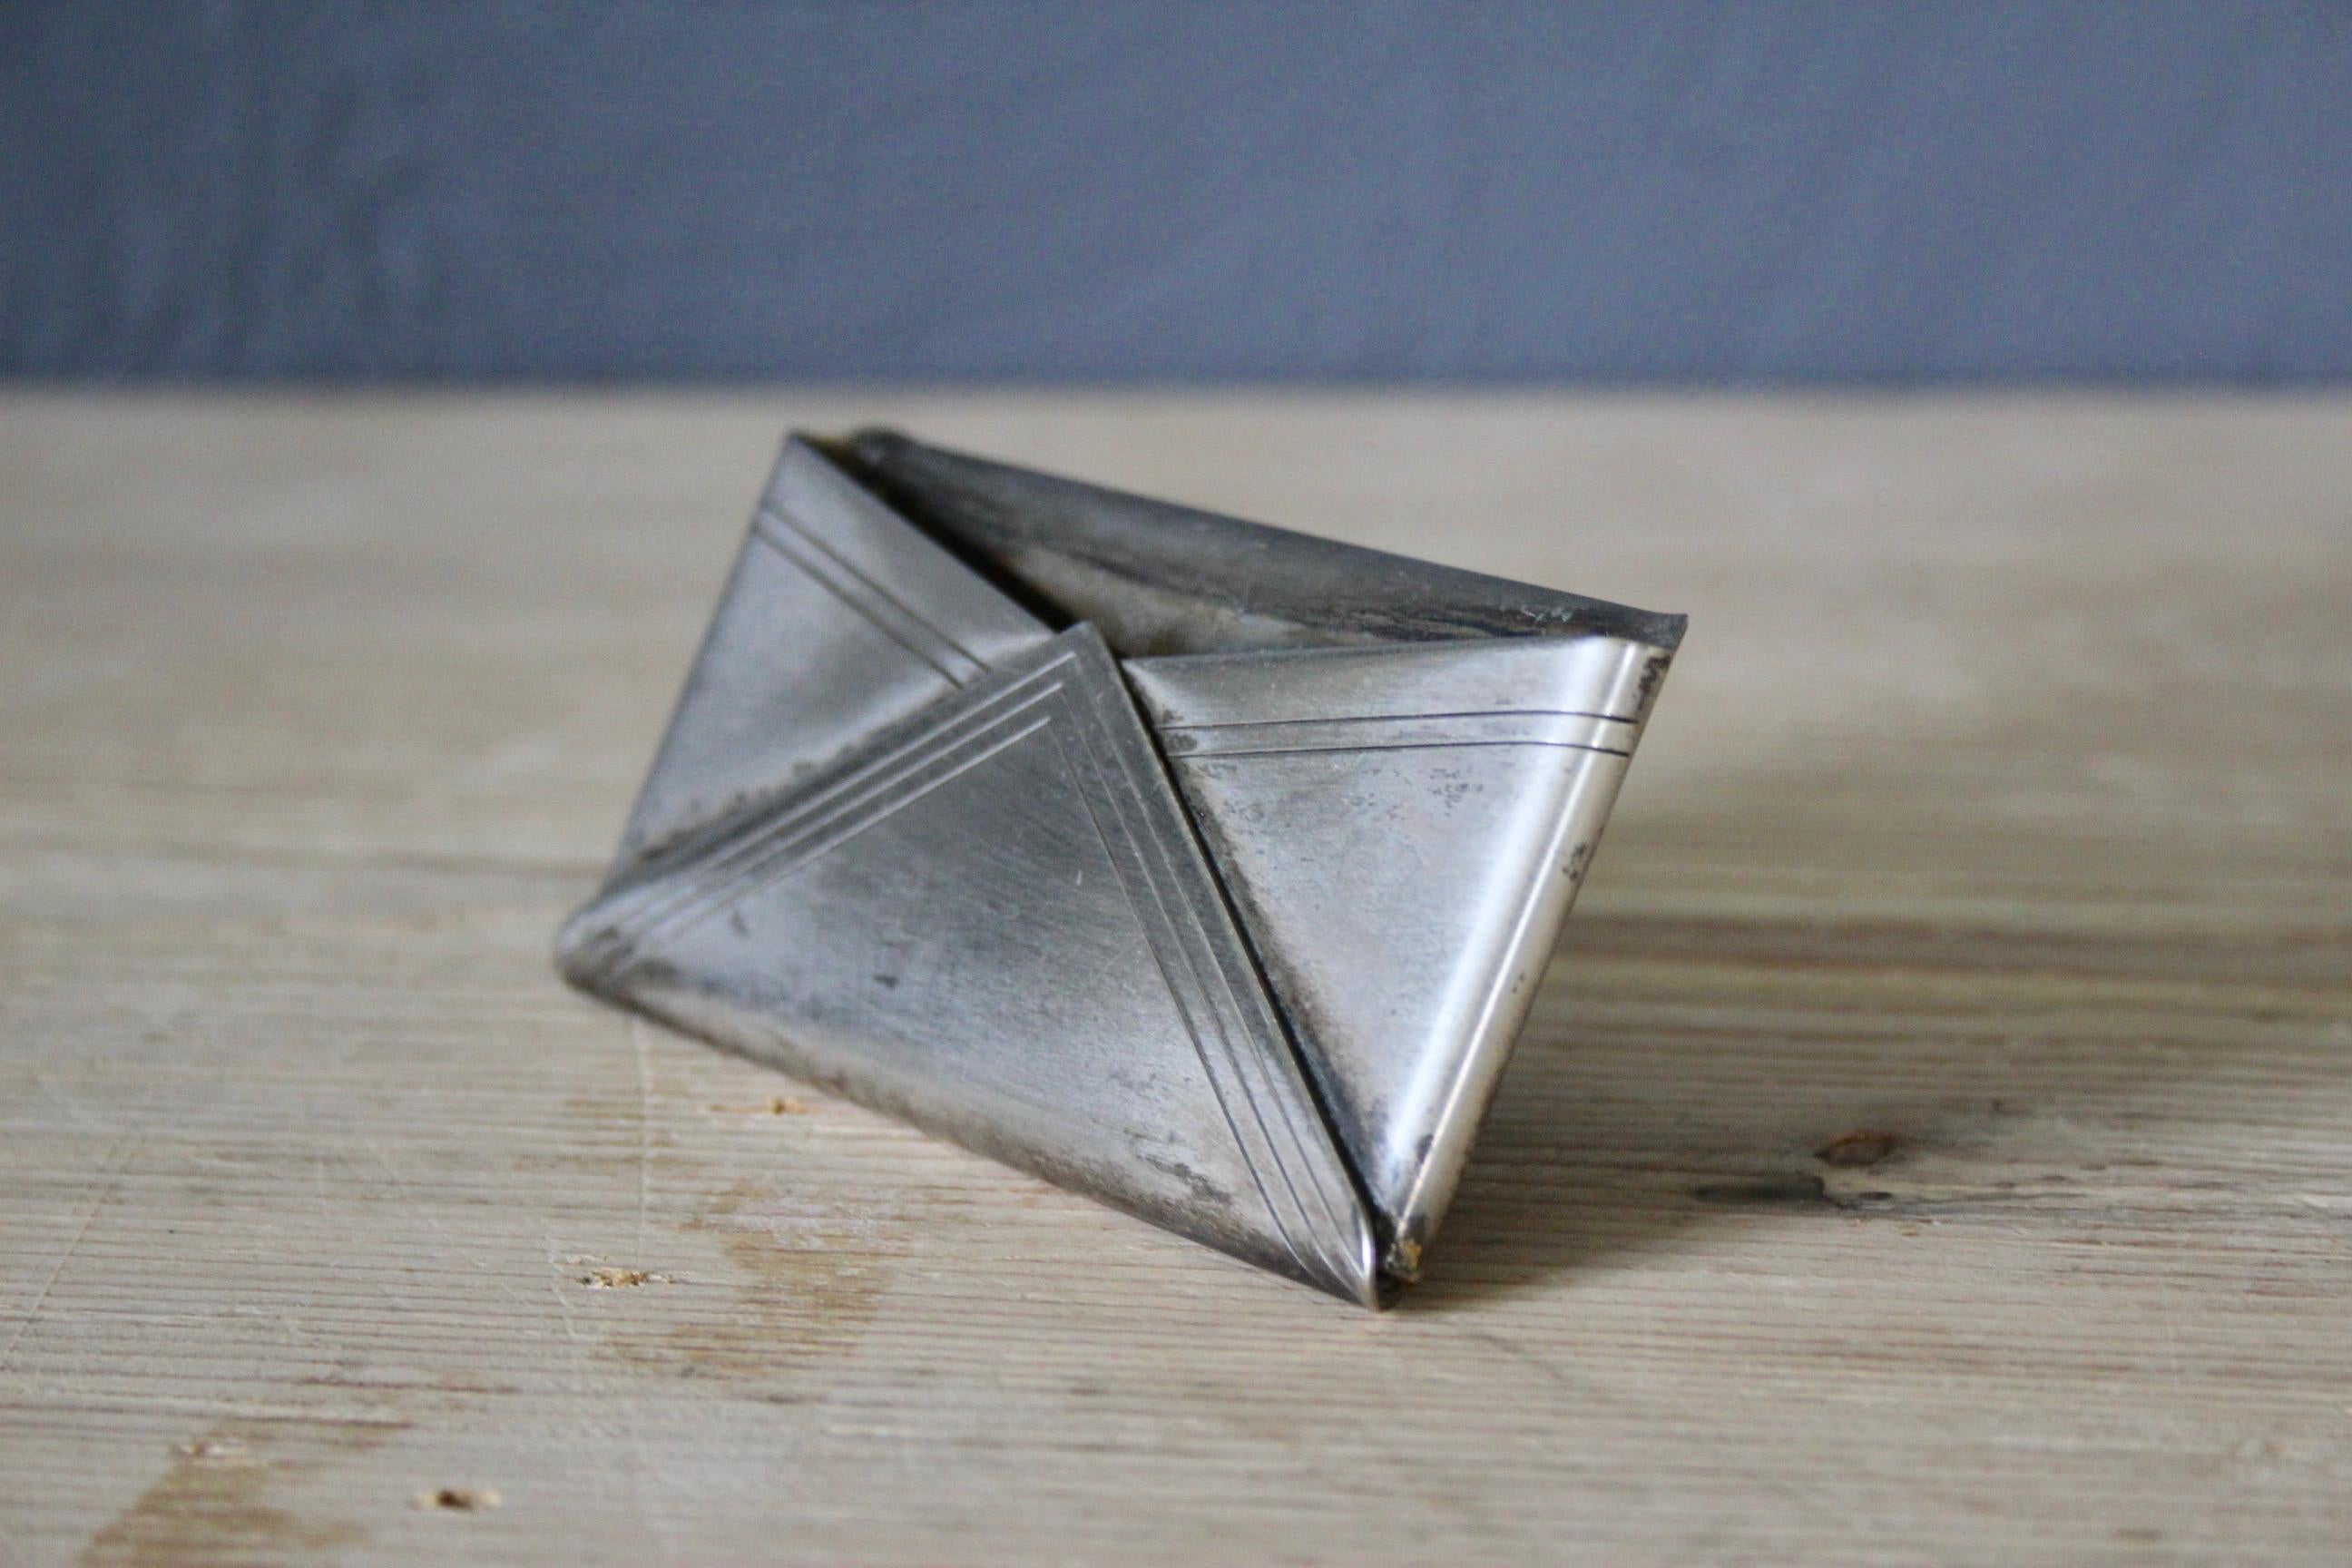 Small metal desk object.